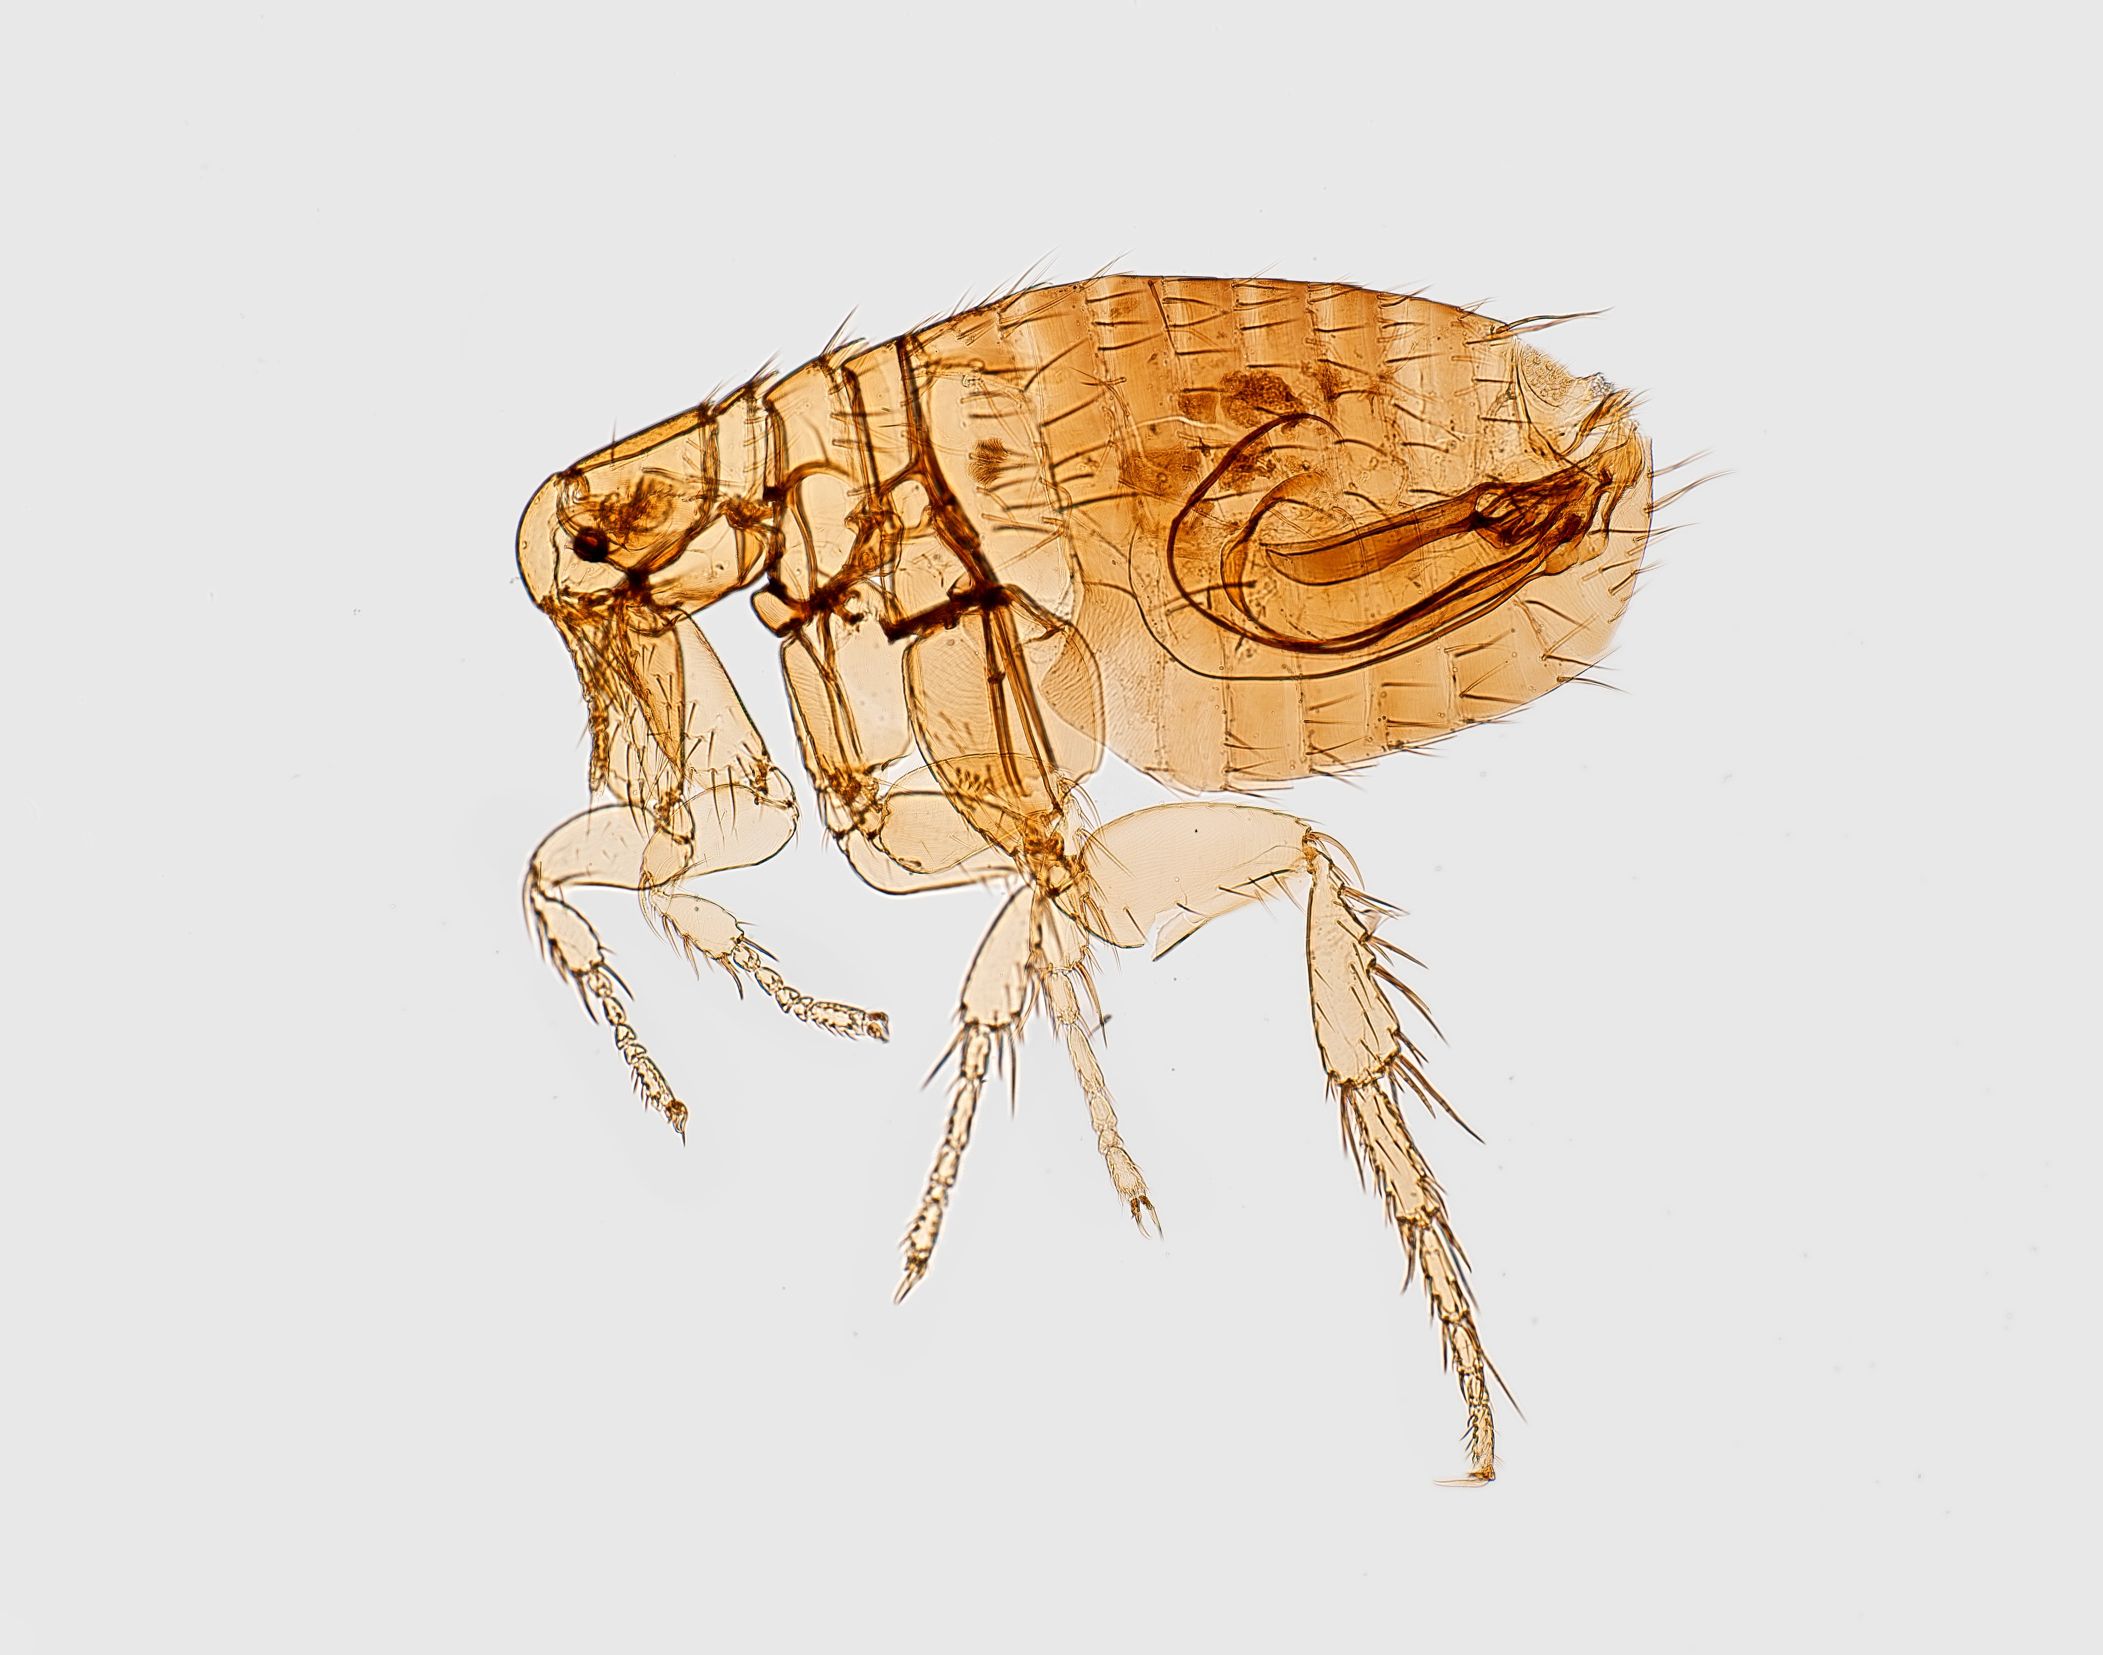 fleas under a microscope